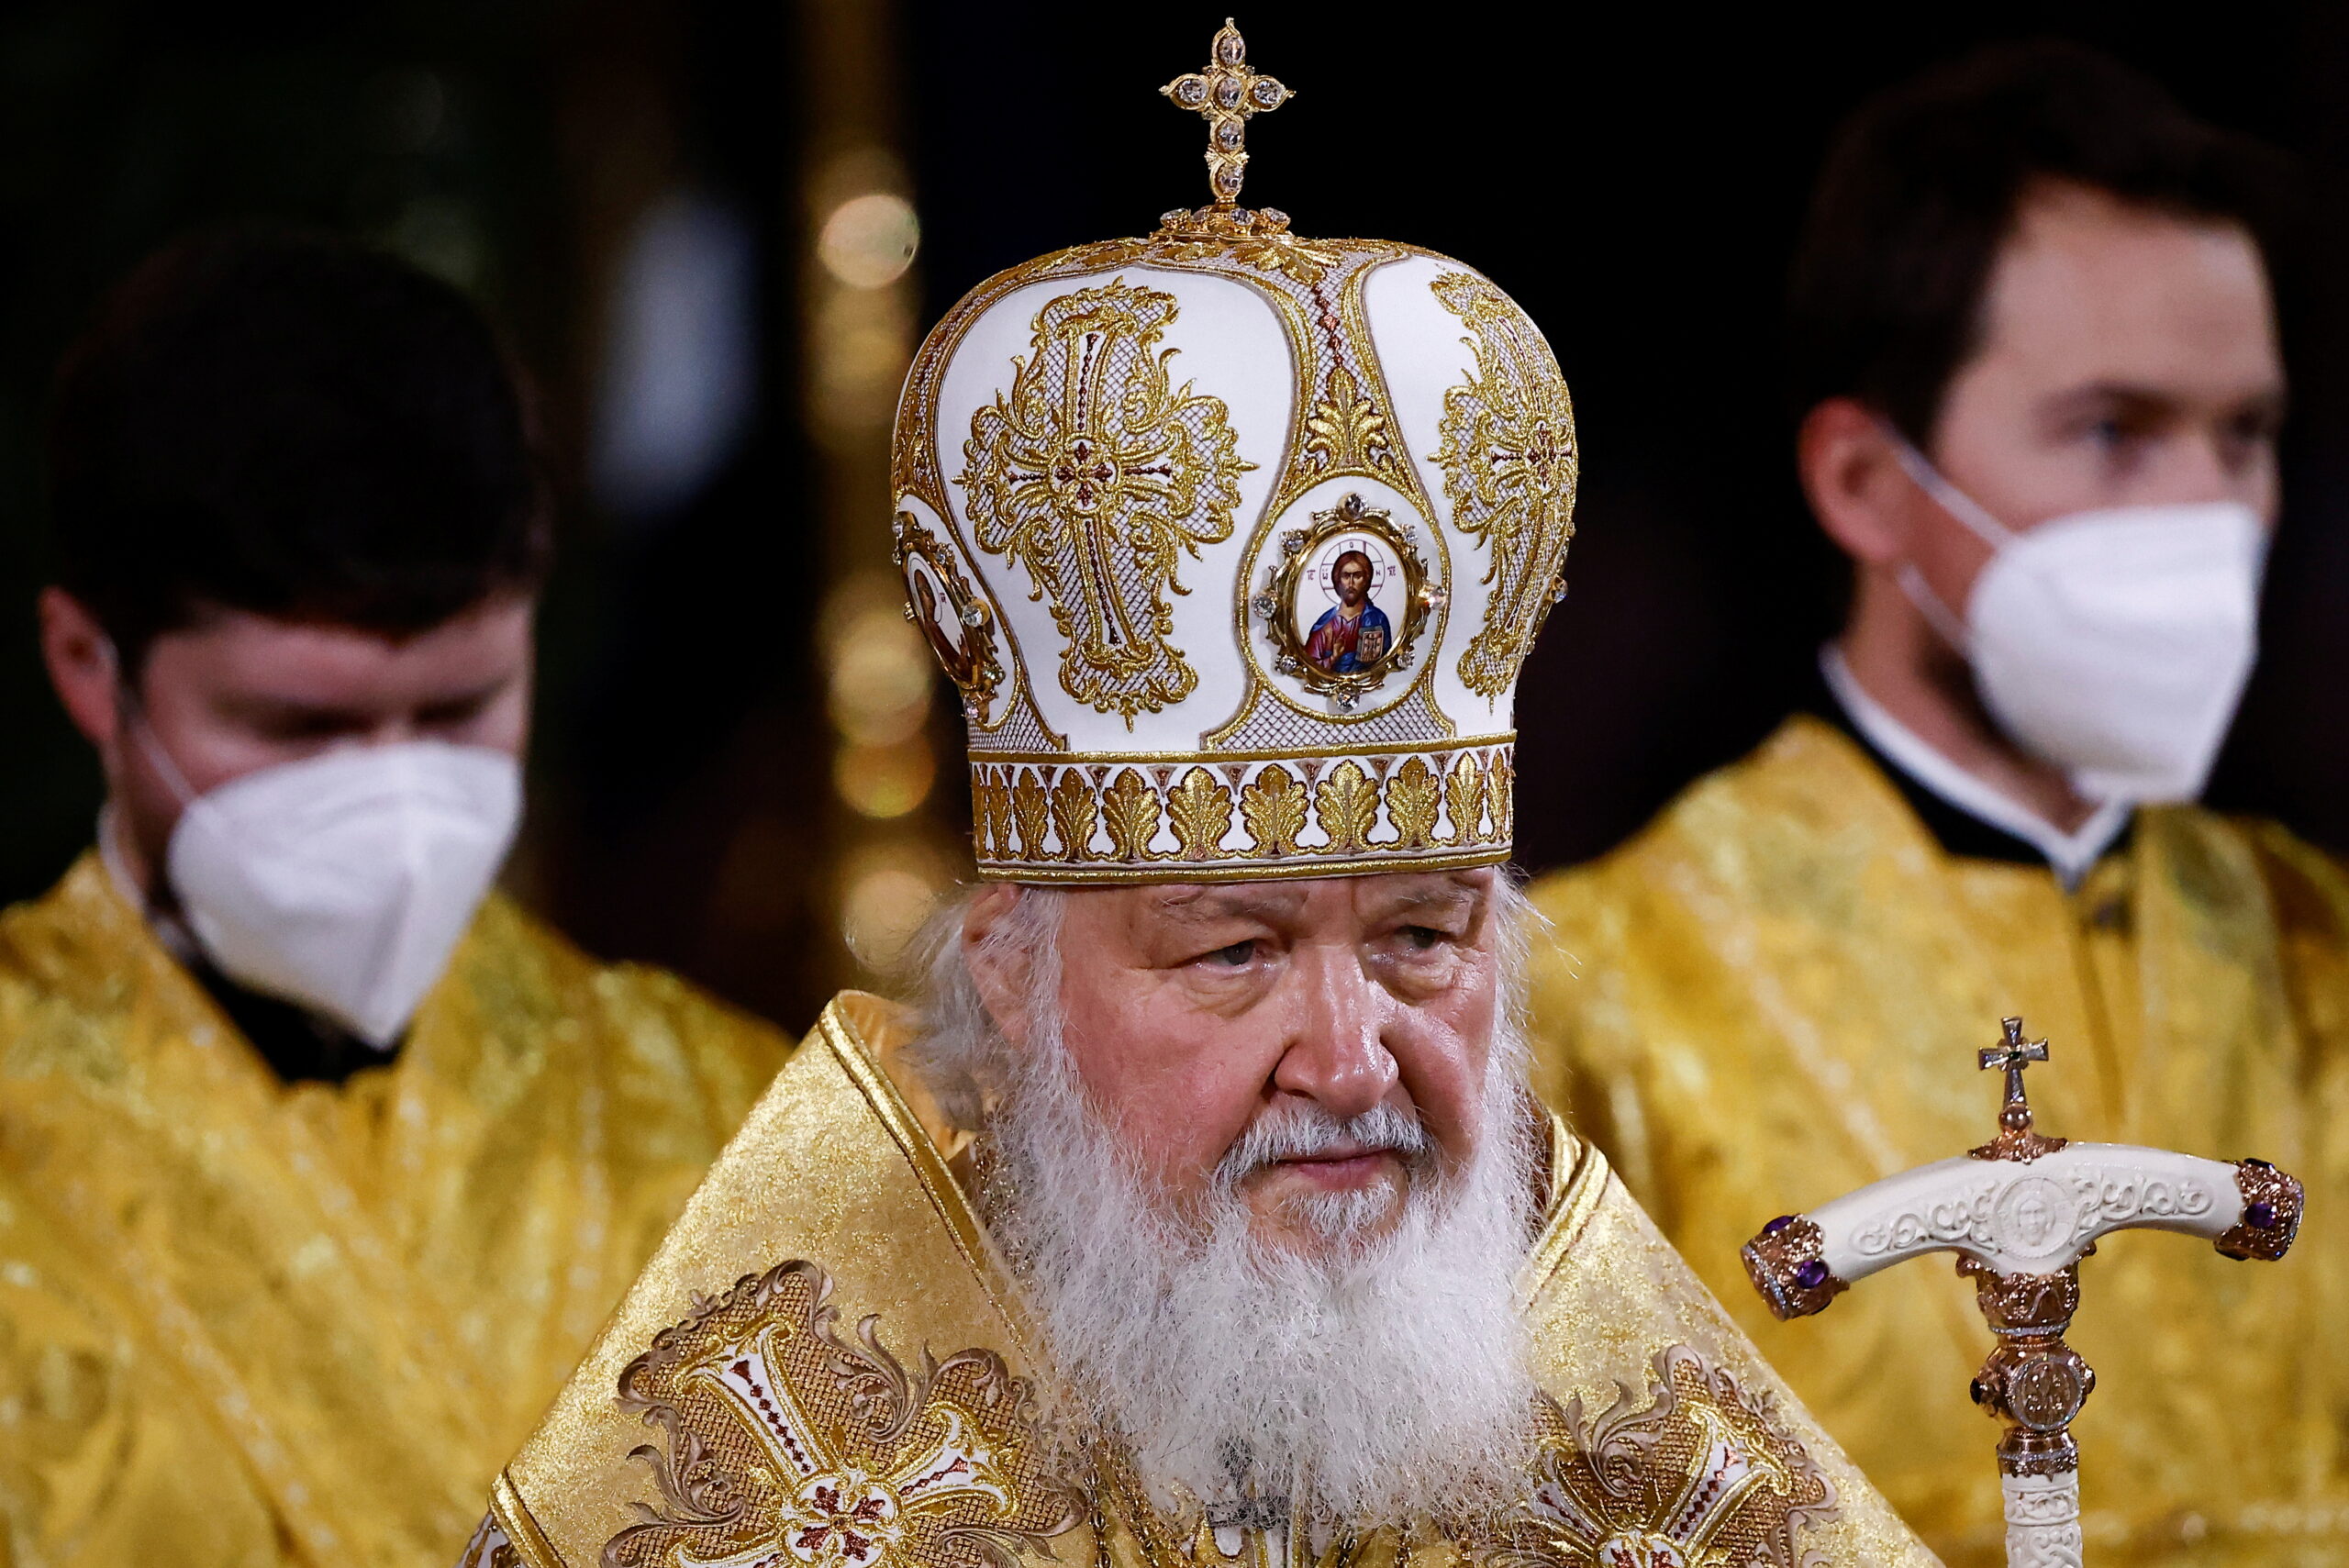 Russian Church creates “Orthodox battalions” for war in Ukraine